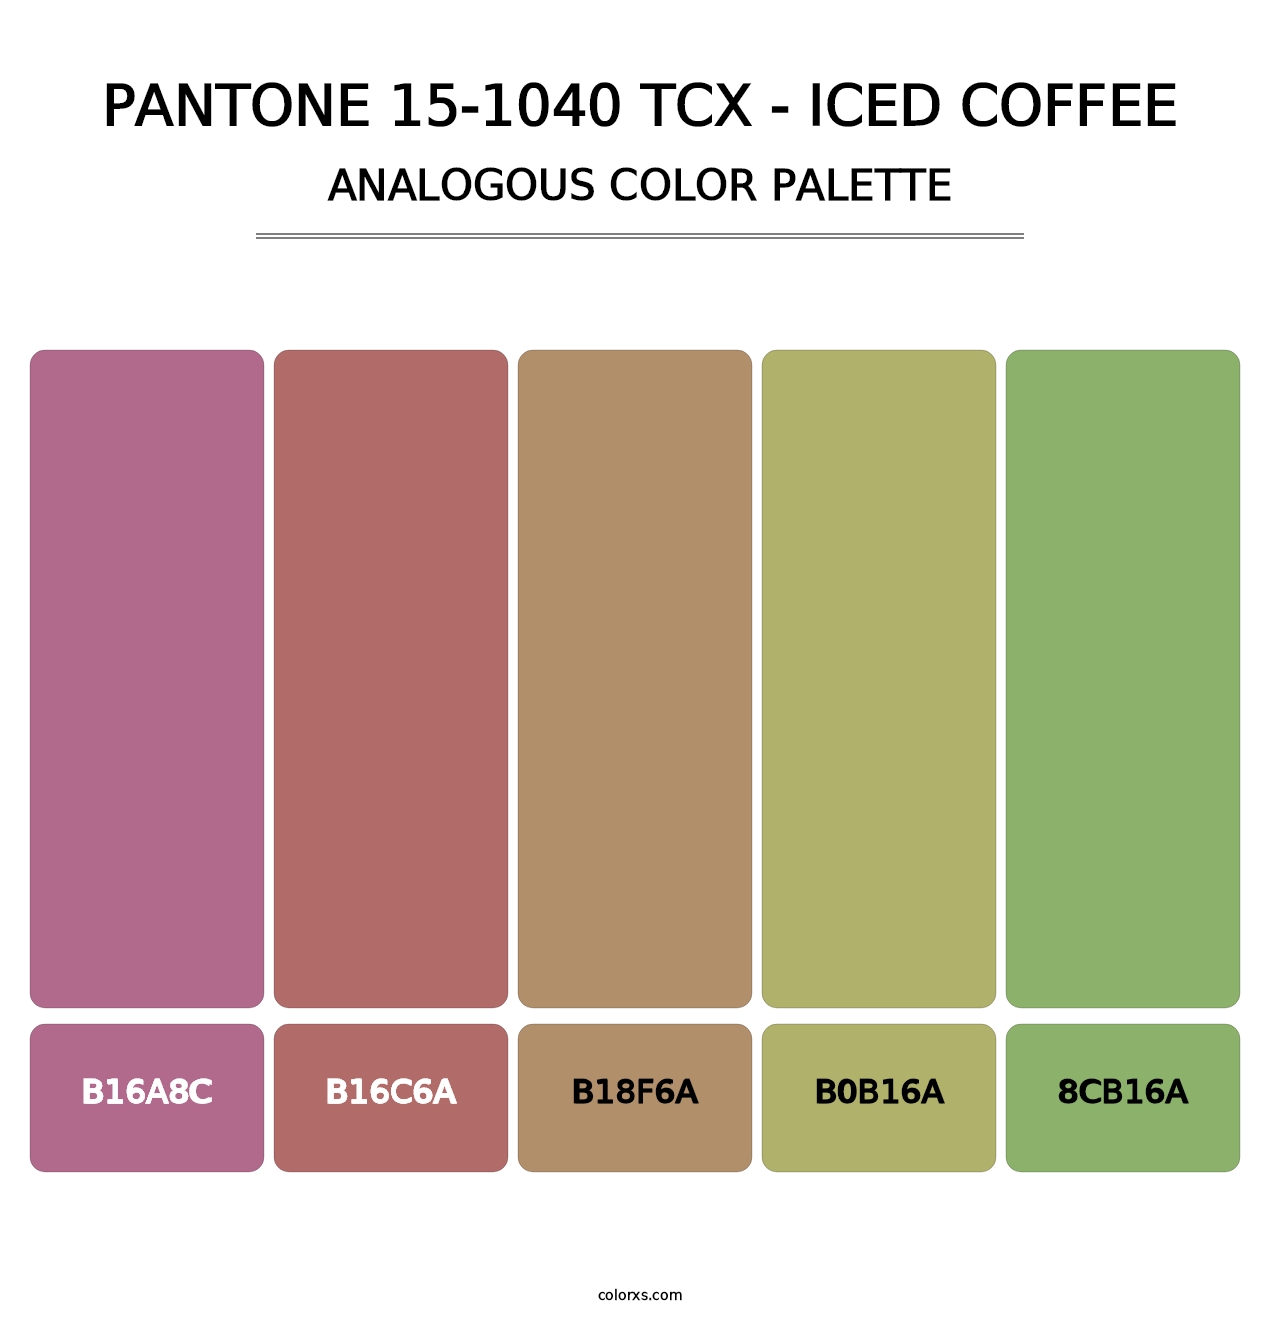 PANTONE 15-1040 TCX - Iced Coffee - Analogous Color Palette